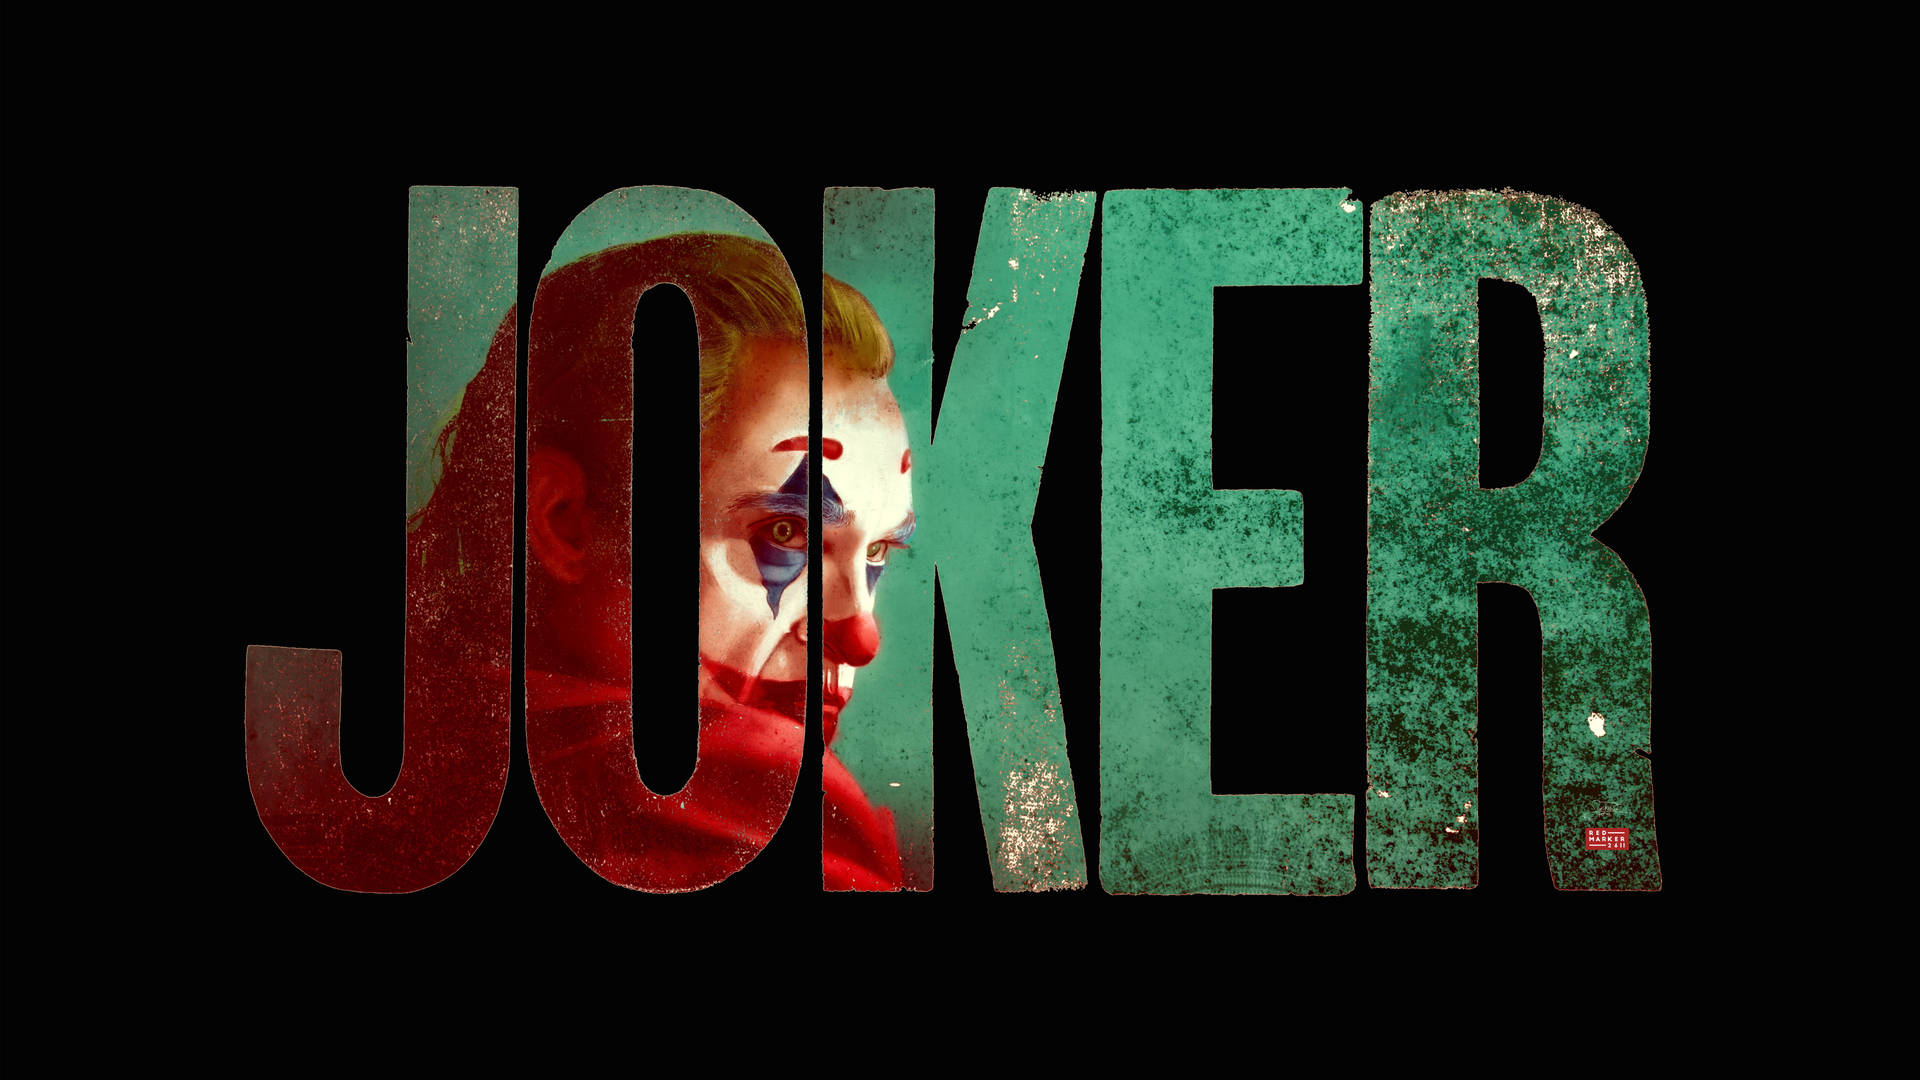 Joker2020 Text Mit Bild Wallpaper